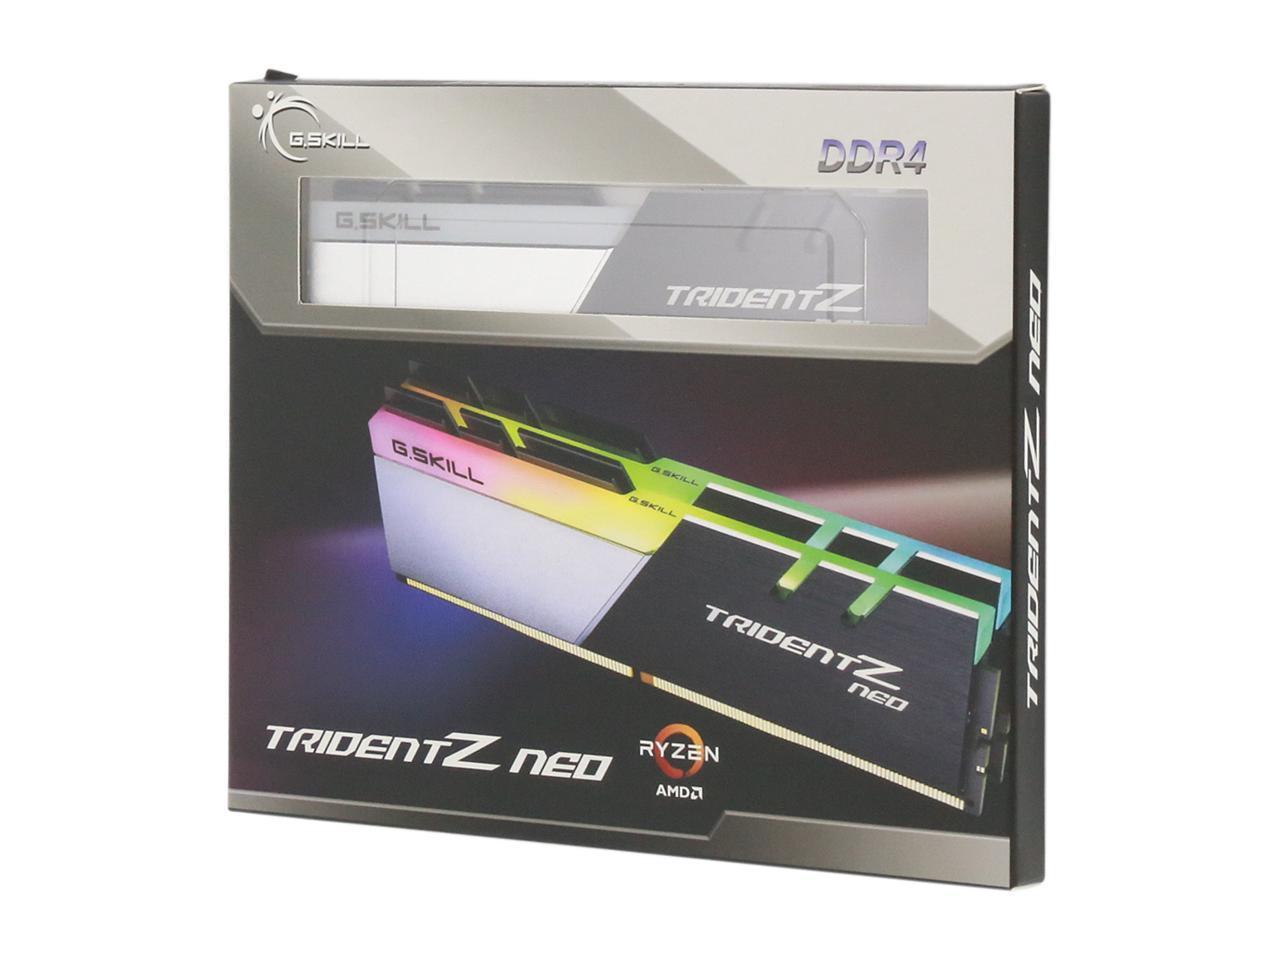 G-SKILL TRIDENT Z NEO RGB SERIES 16G*2 DDR4 3600